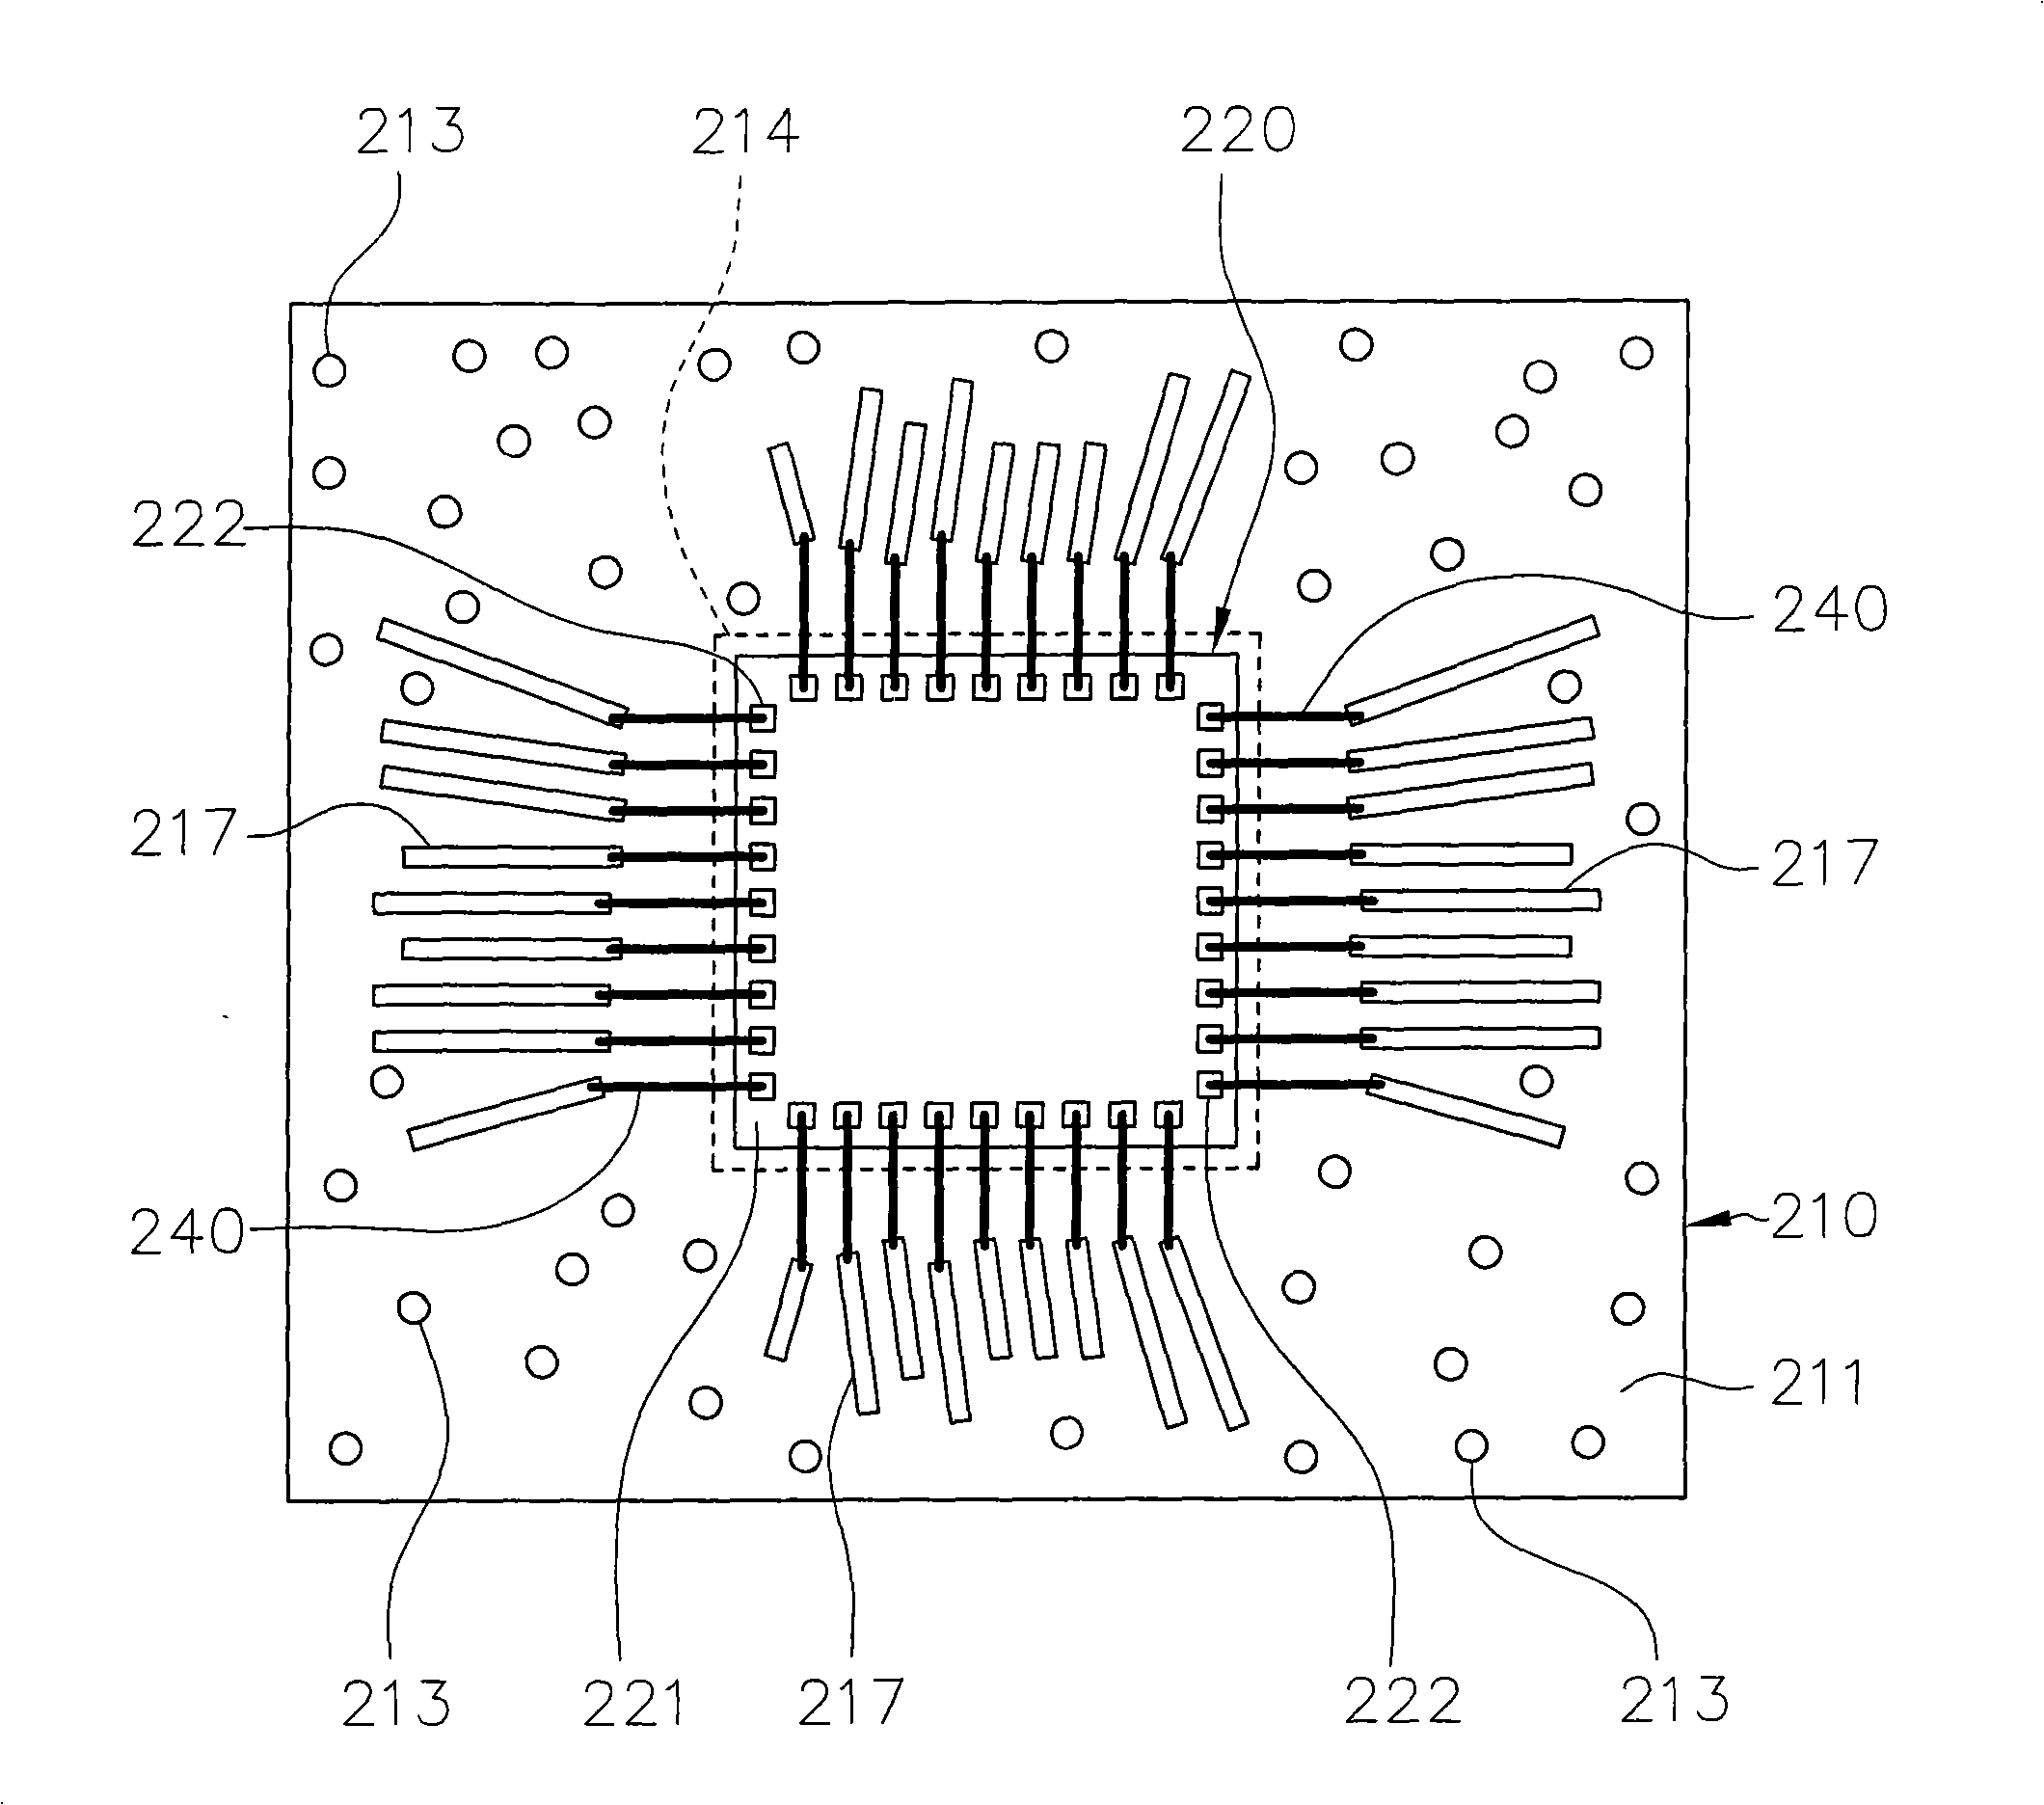 Semiconductor encapsulation construction